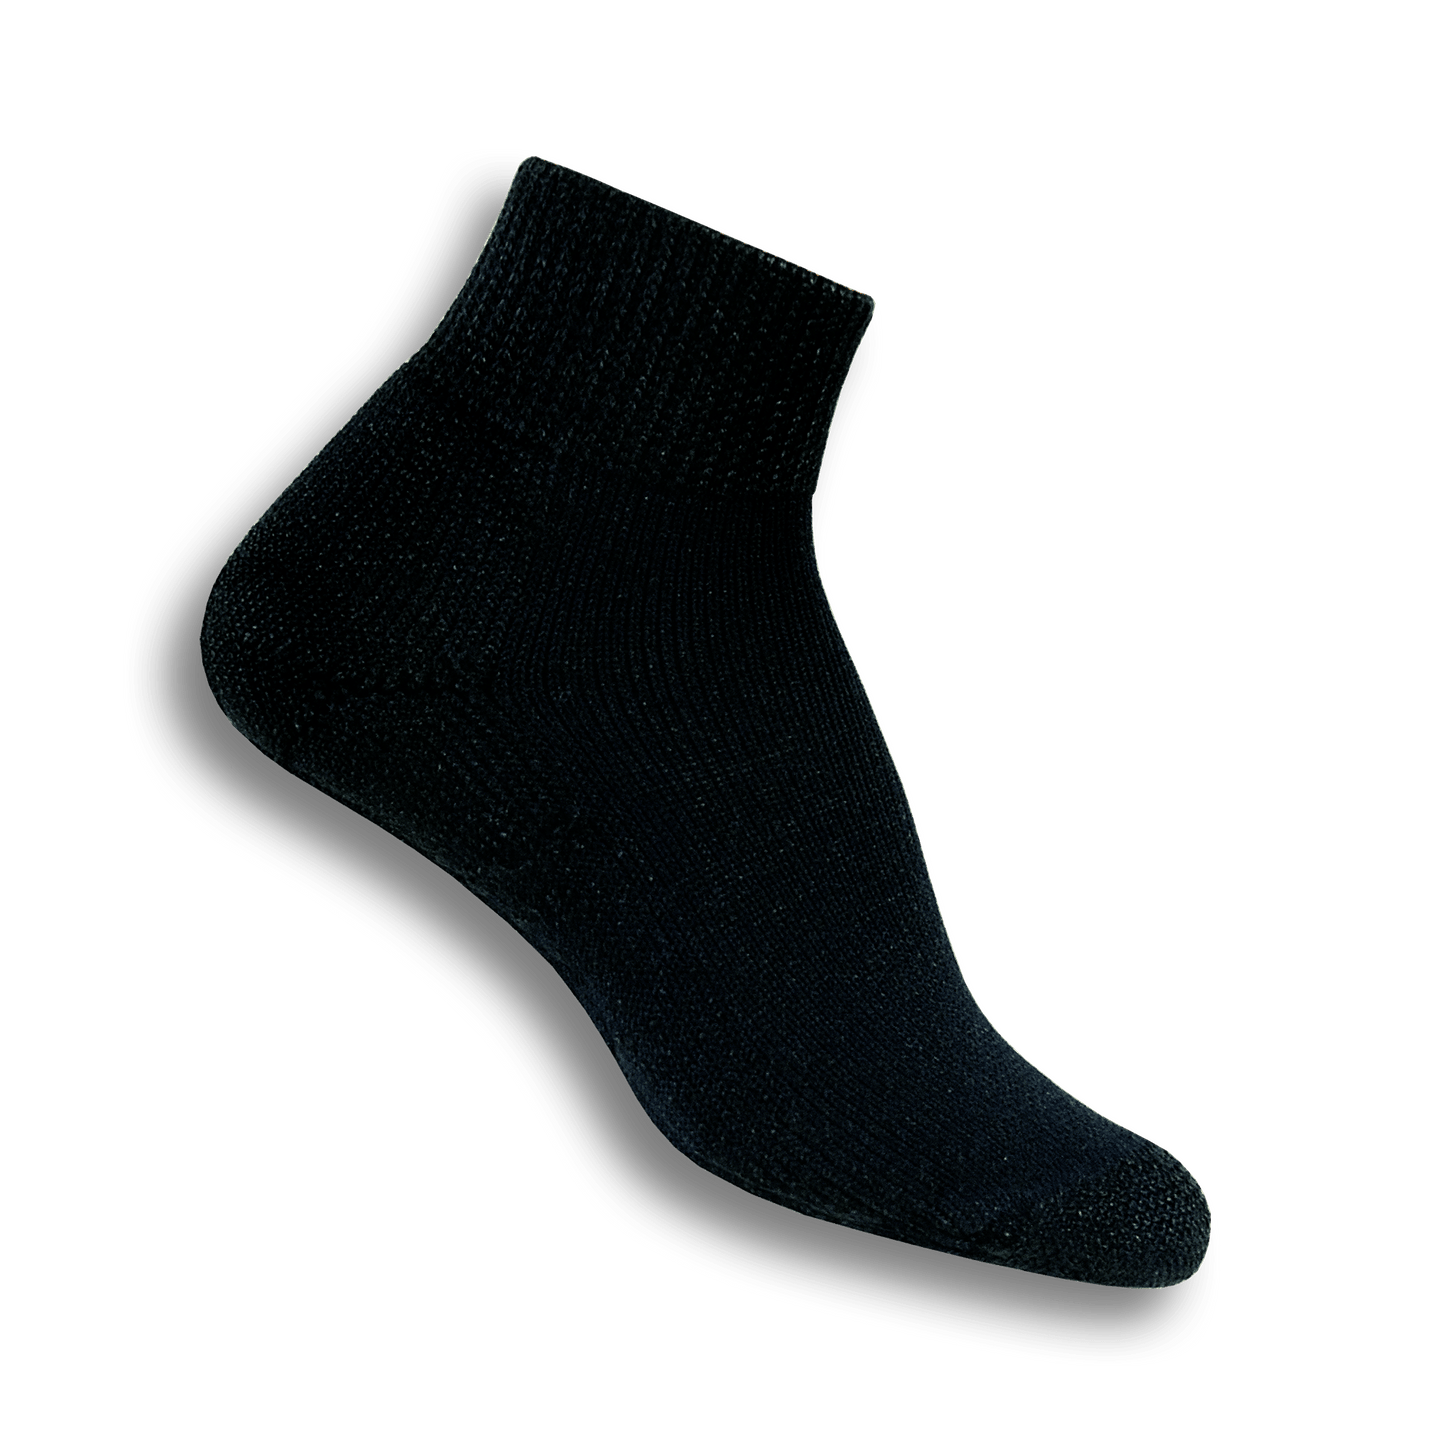 Thorlos Women's Ankle Advanced Diabetic Socks in Black